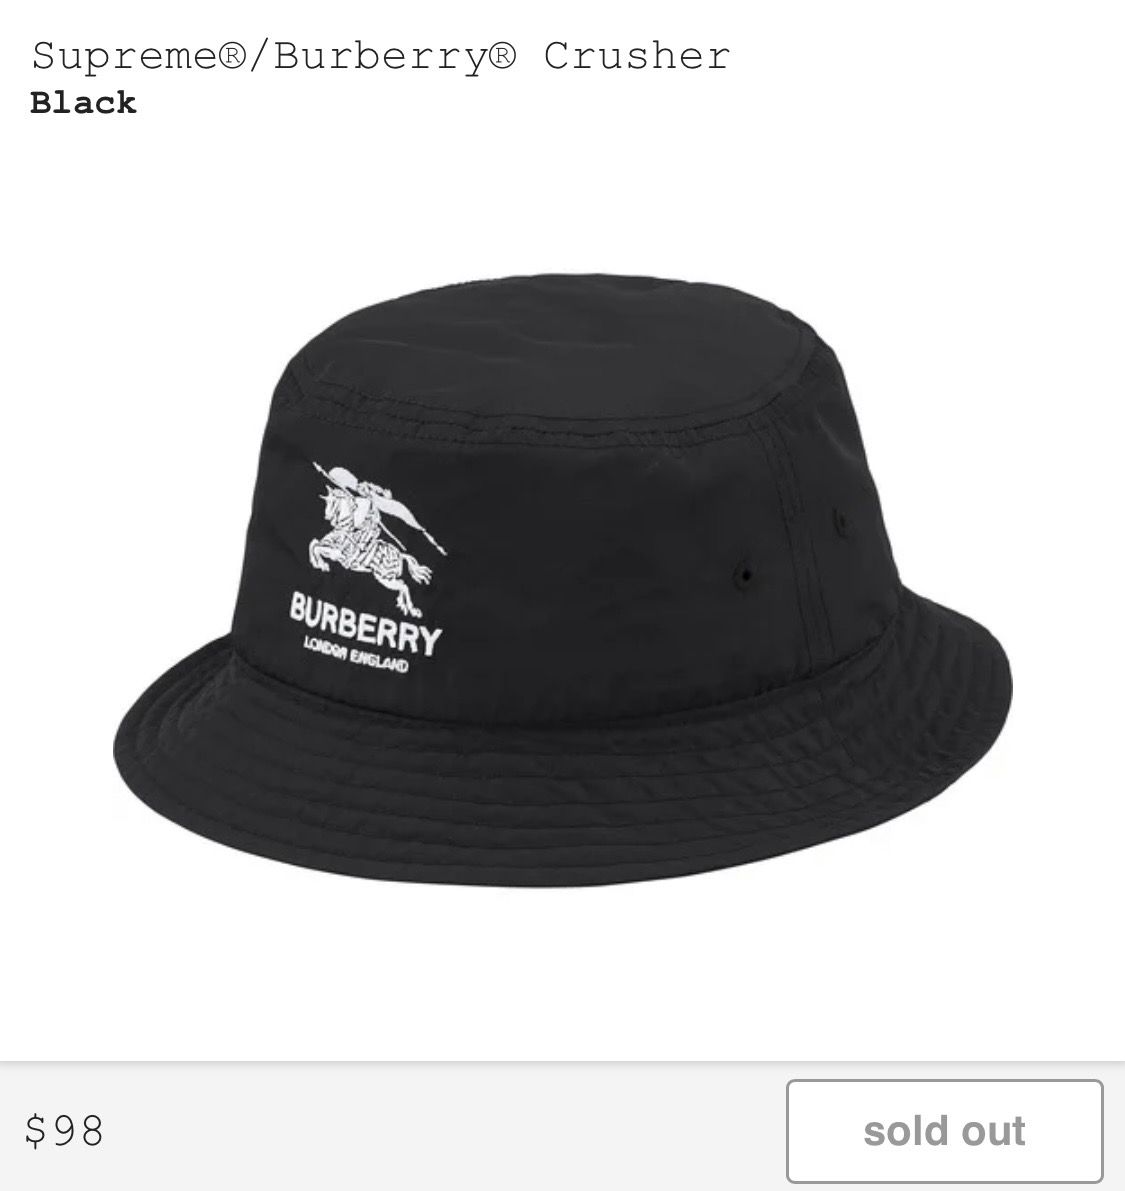 Supreme Supreme Burberry Crusher Bucket Hat Black | Grailed